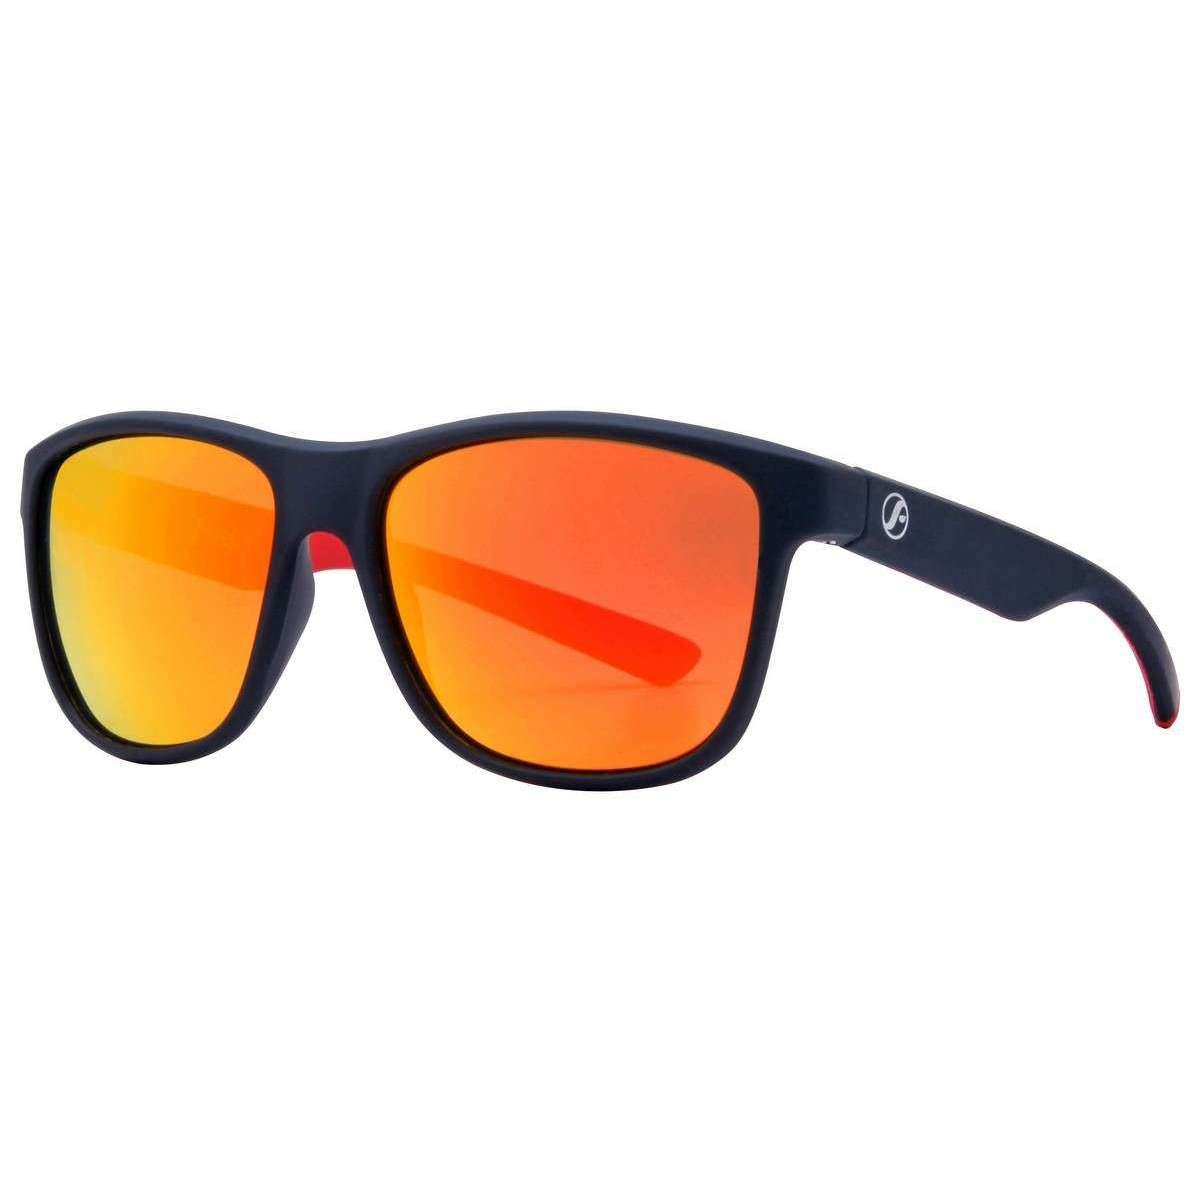 Freedom D-Frame Sport Sunglasses - Solid Black